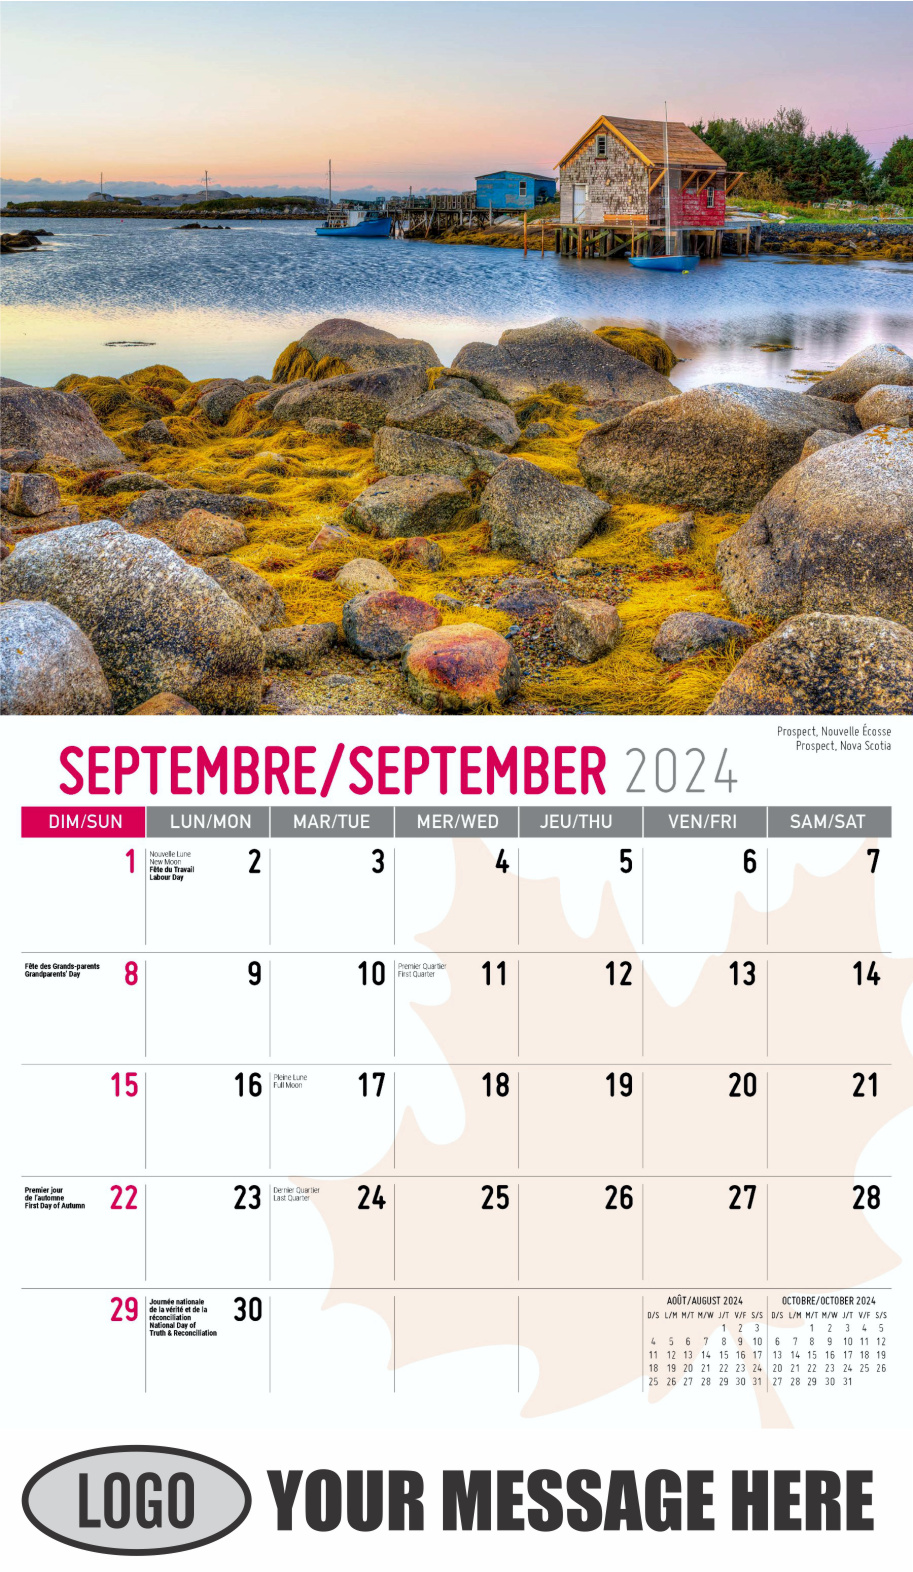 Scenes of Canada 2024 Bilingual Business Advertising Calendar - September